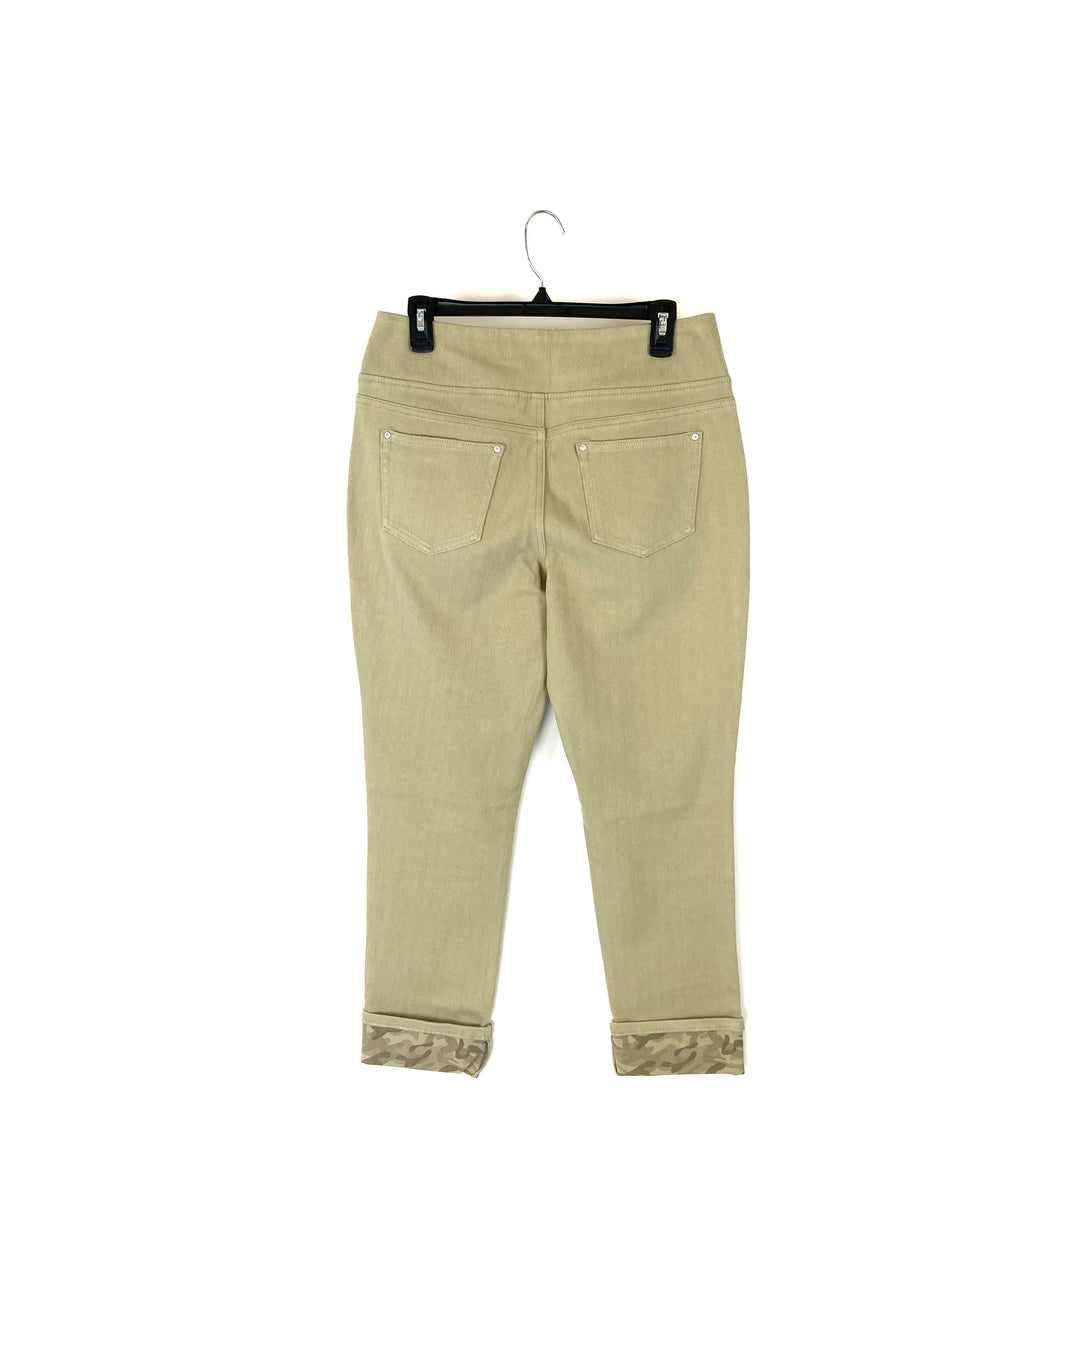 Dark Khaki Camo Print Cuff Pants - Size 12/14